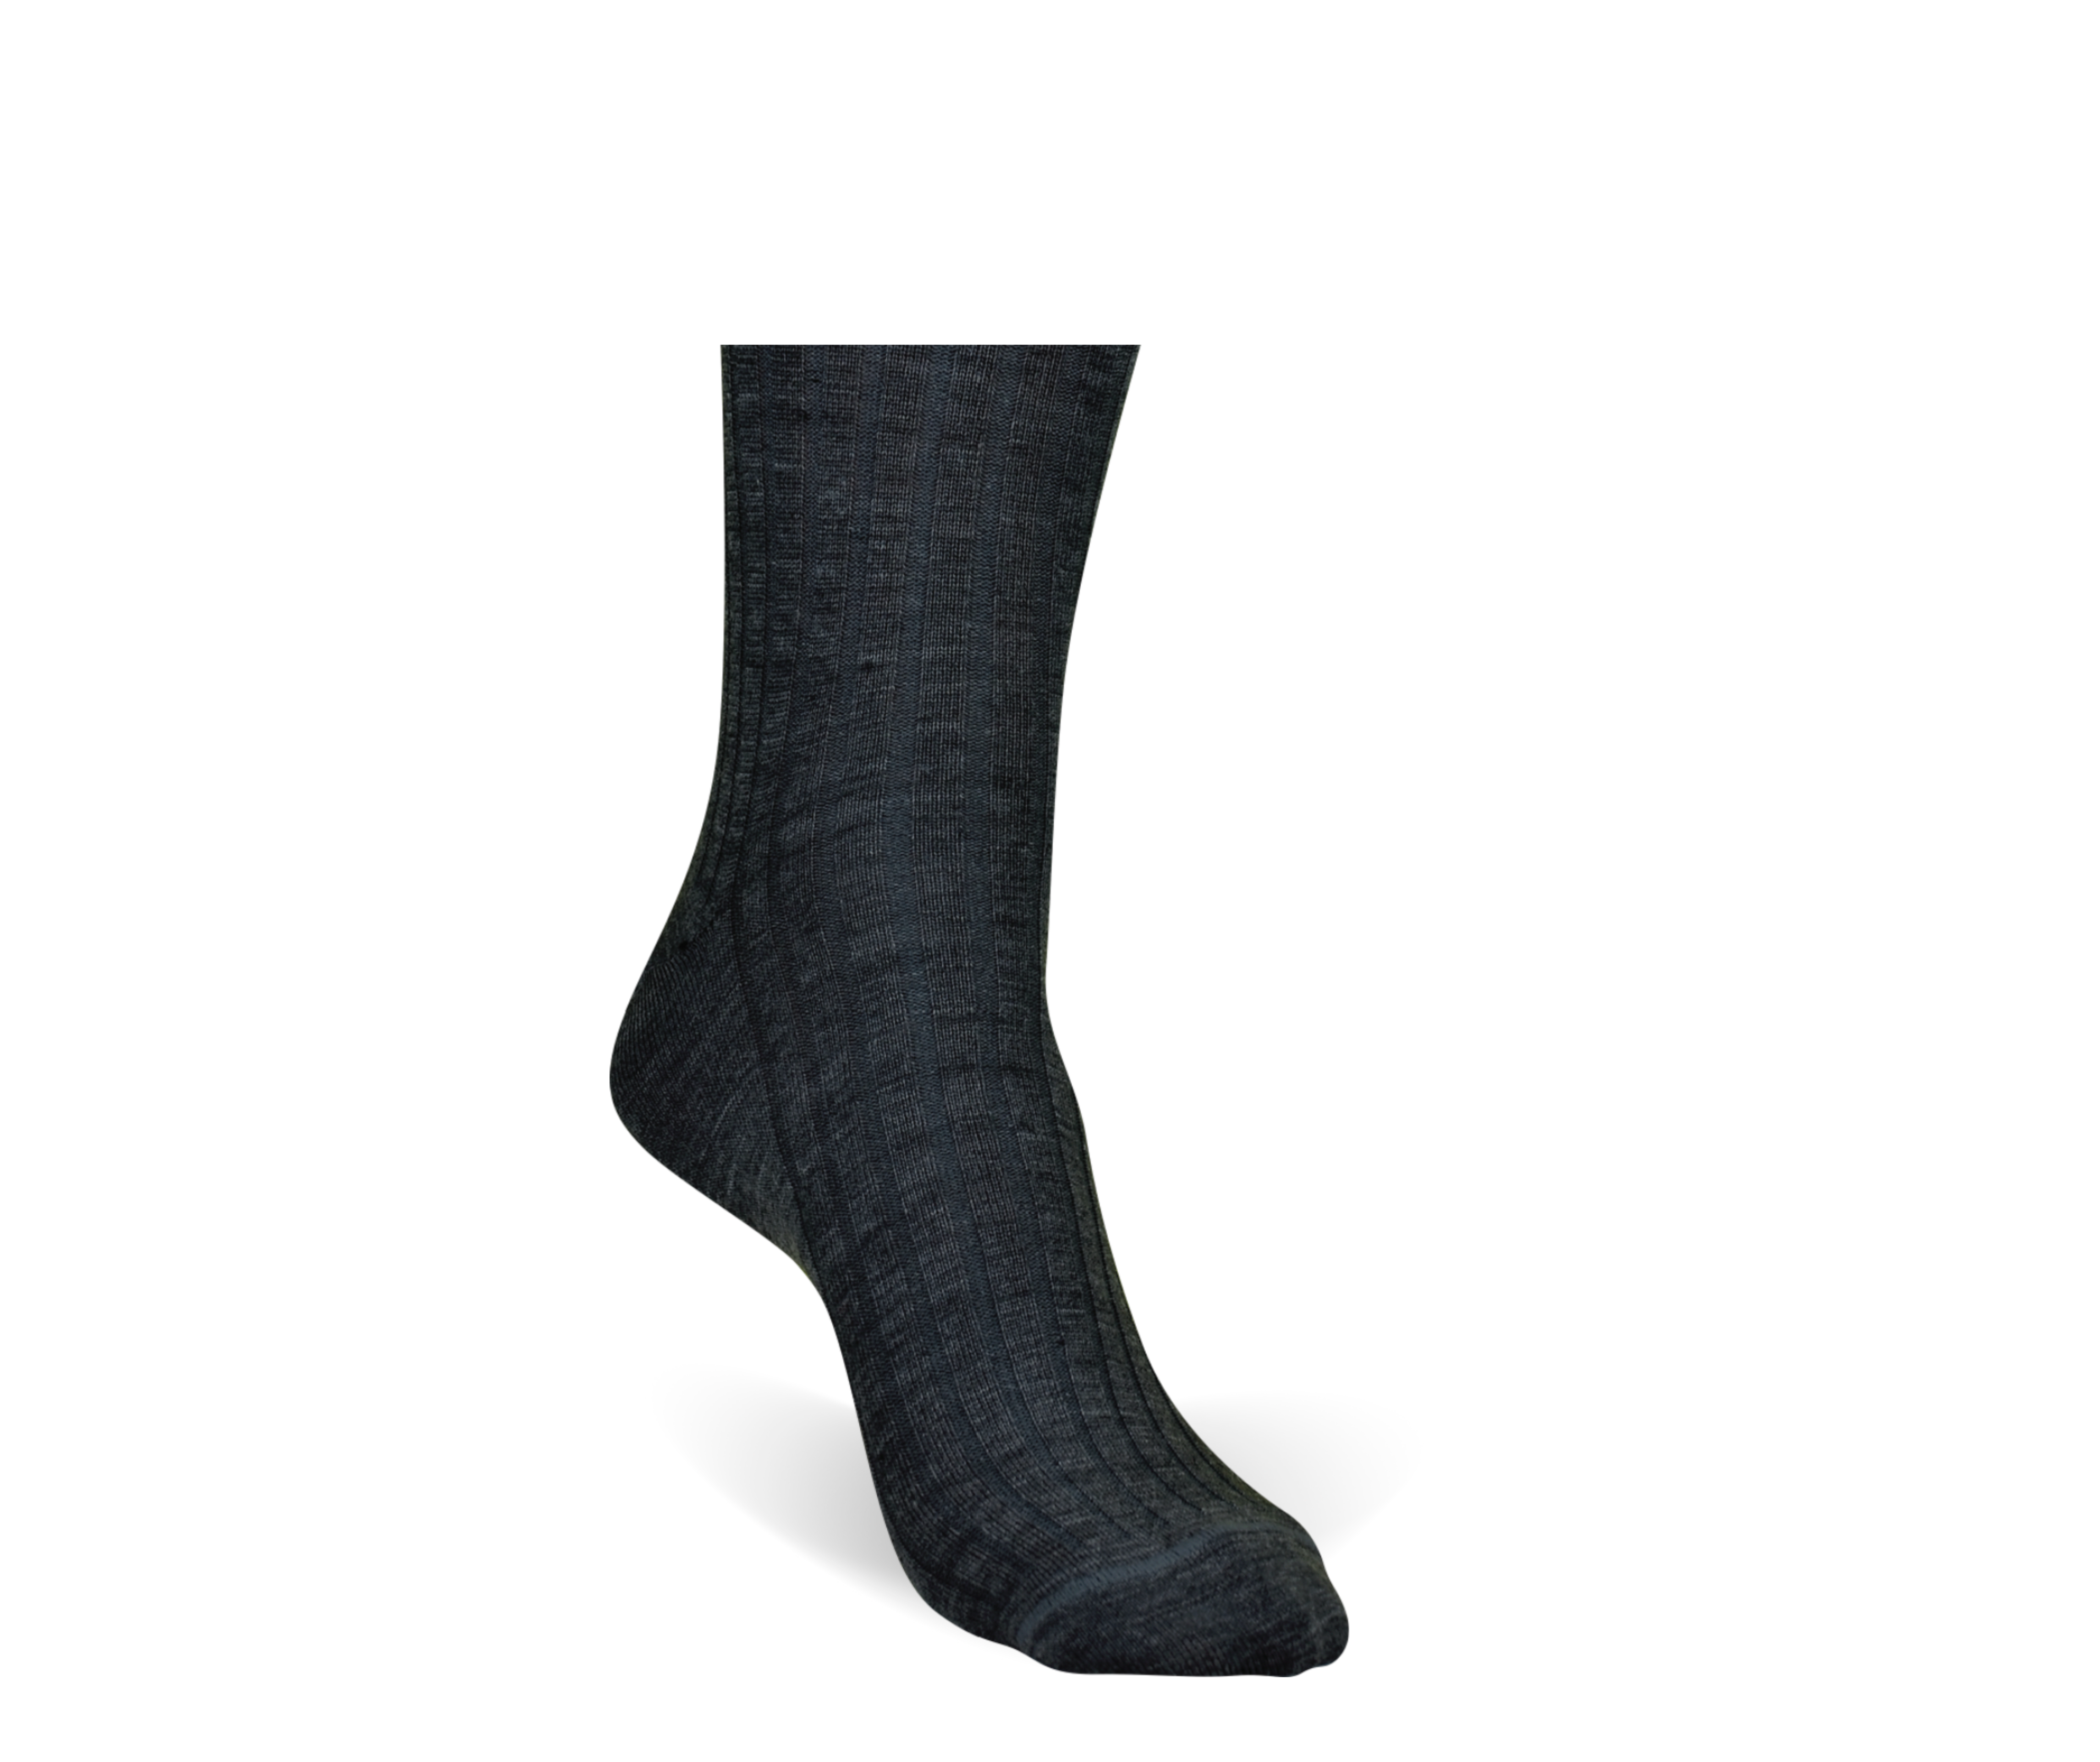 Superwash Merino Wool Socks- Solid